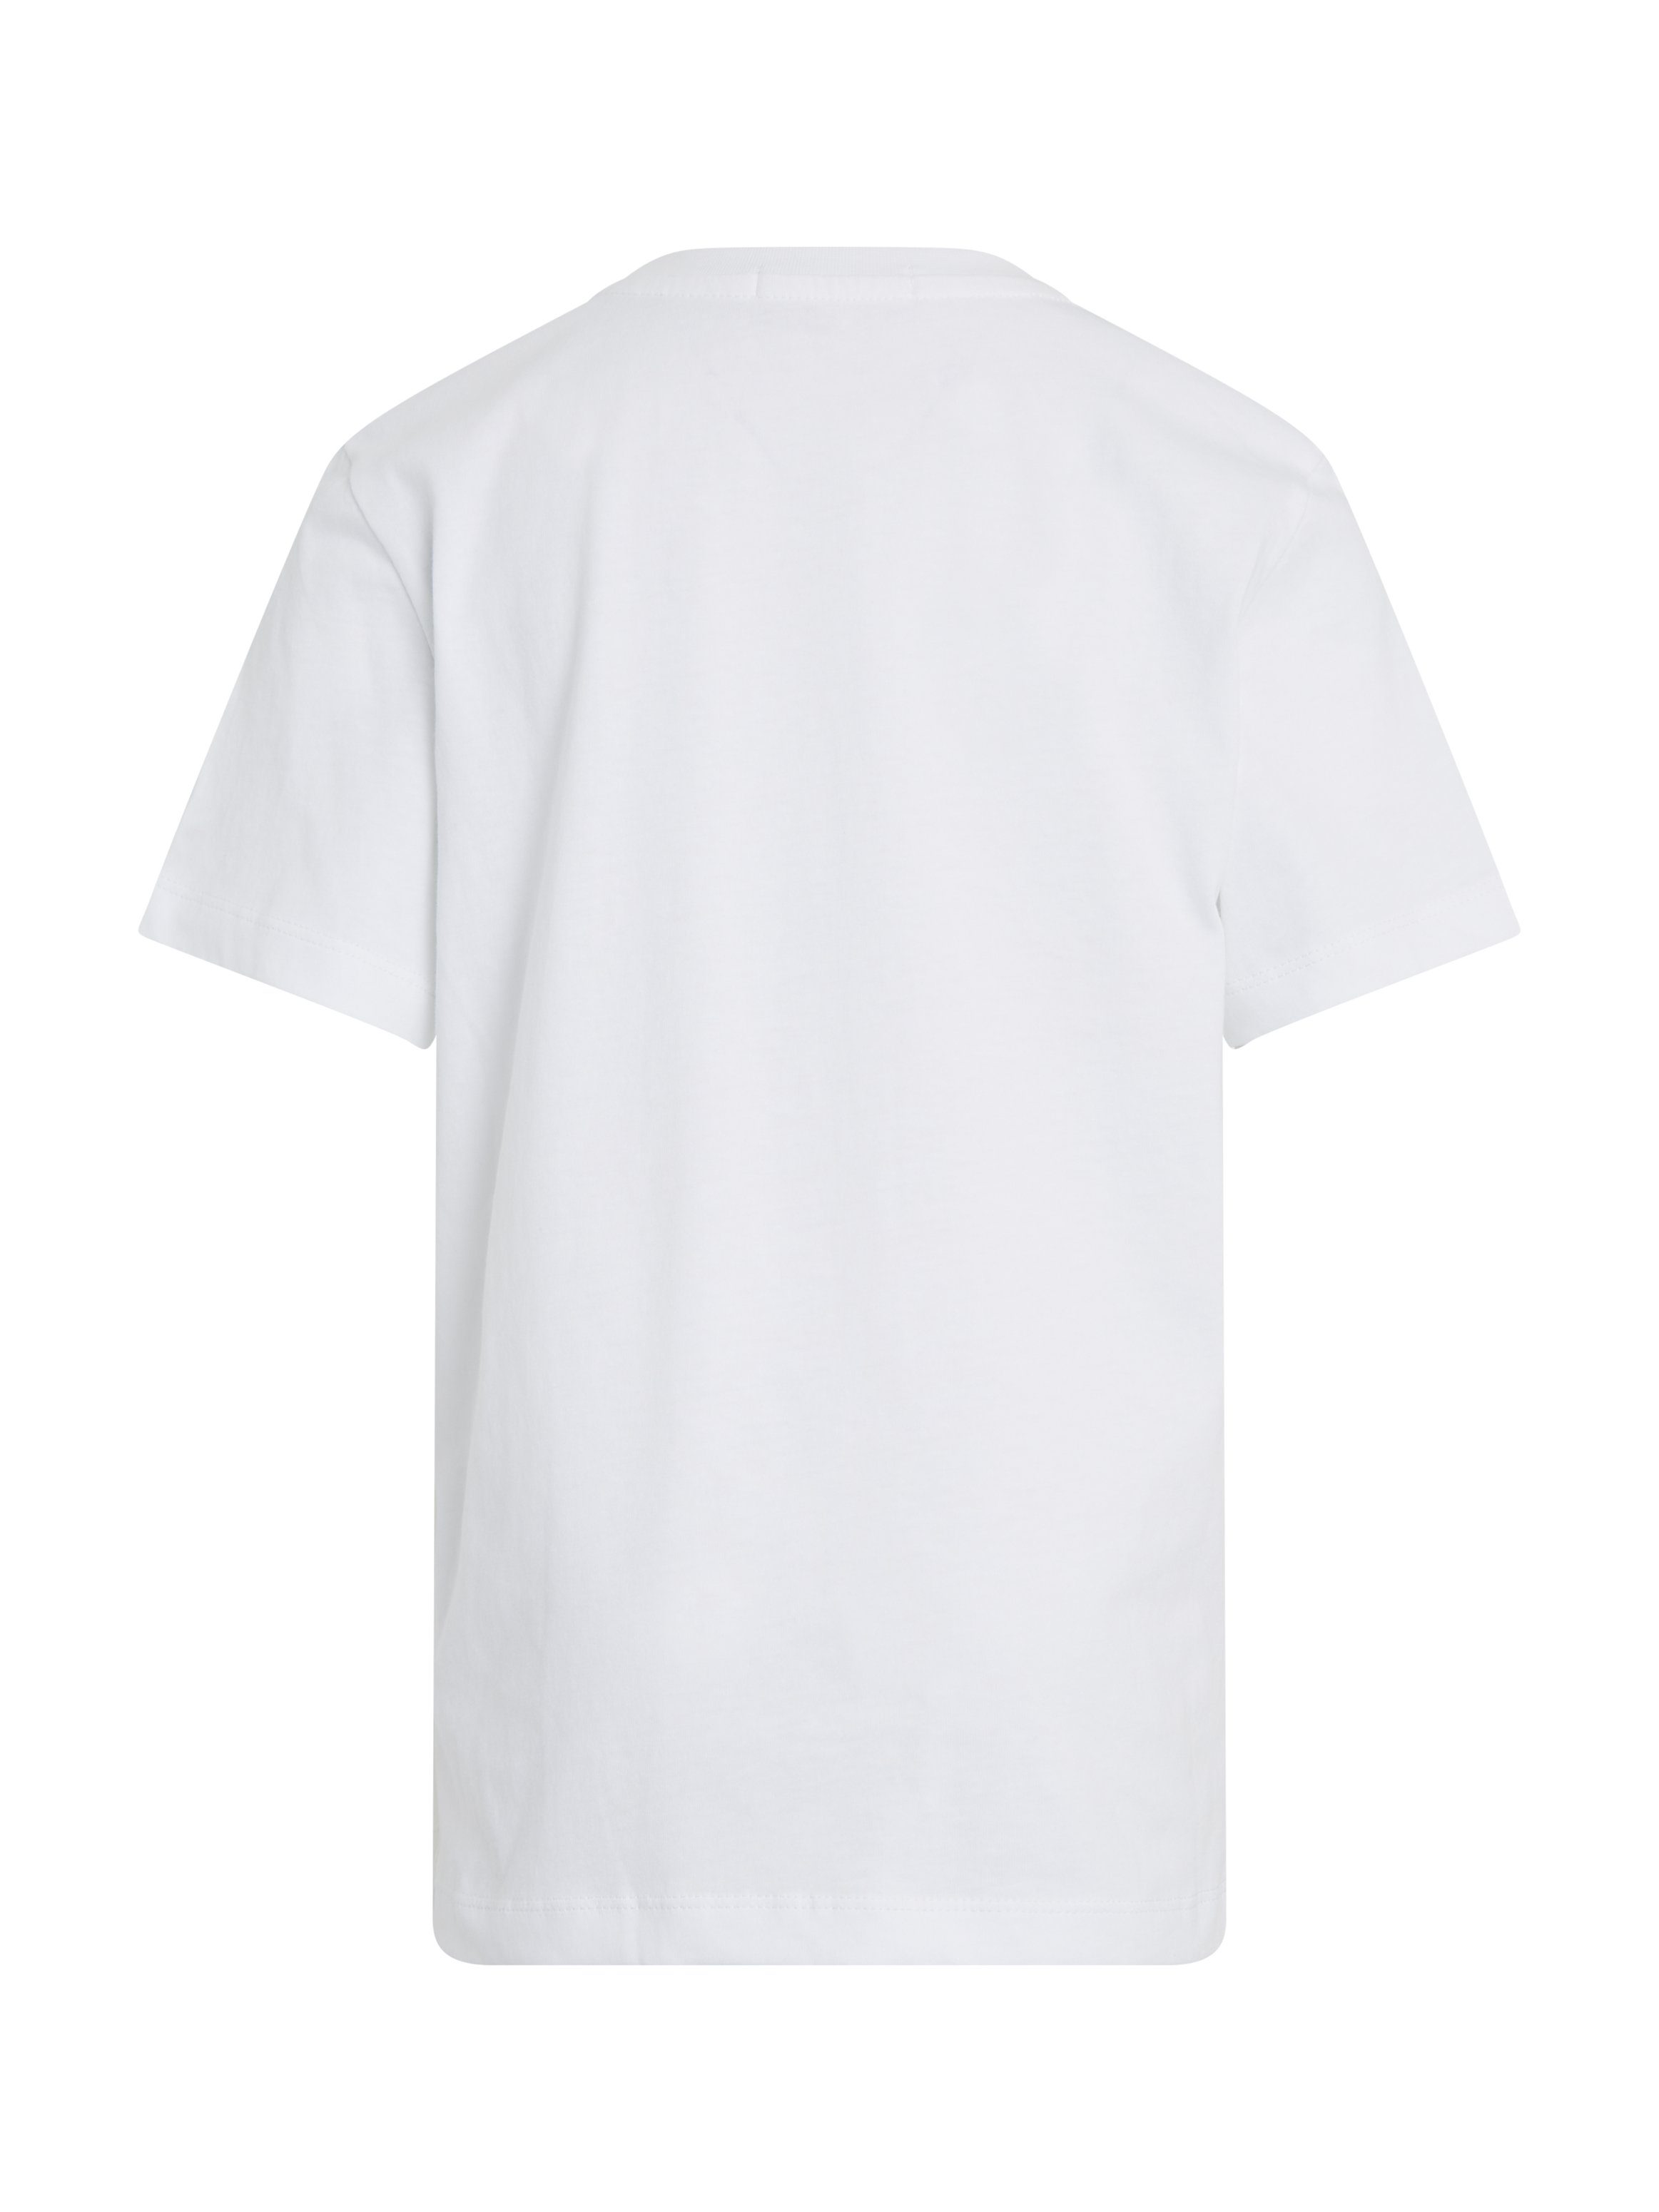 Calvin Klein Jeans CK White SS MONOGRAM T-Shirt Bright T-SHIRT